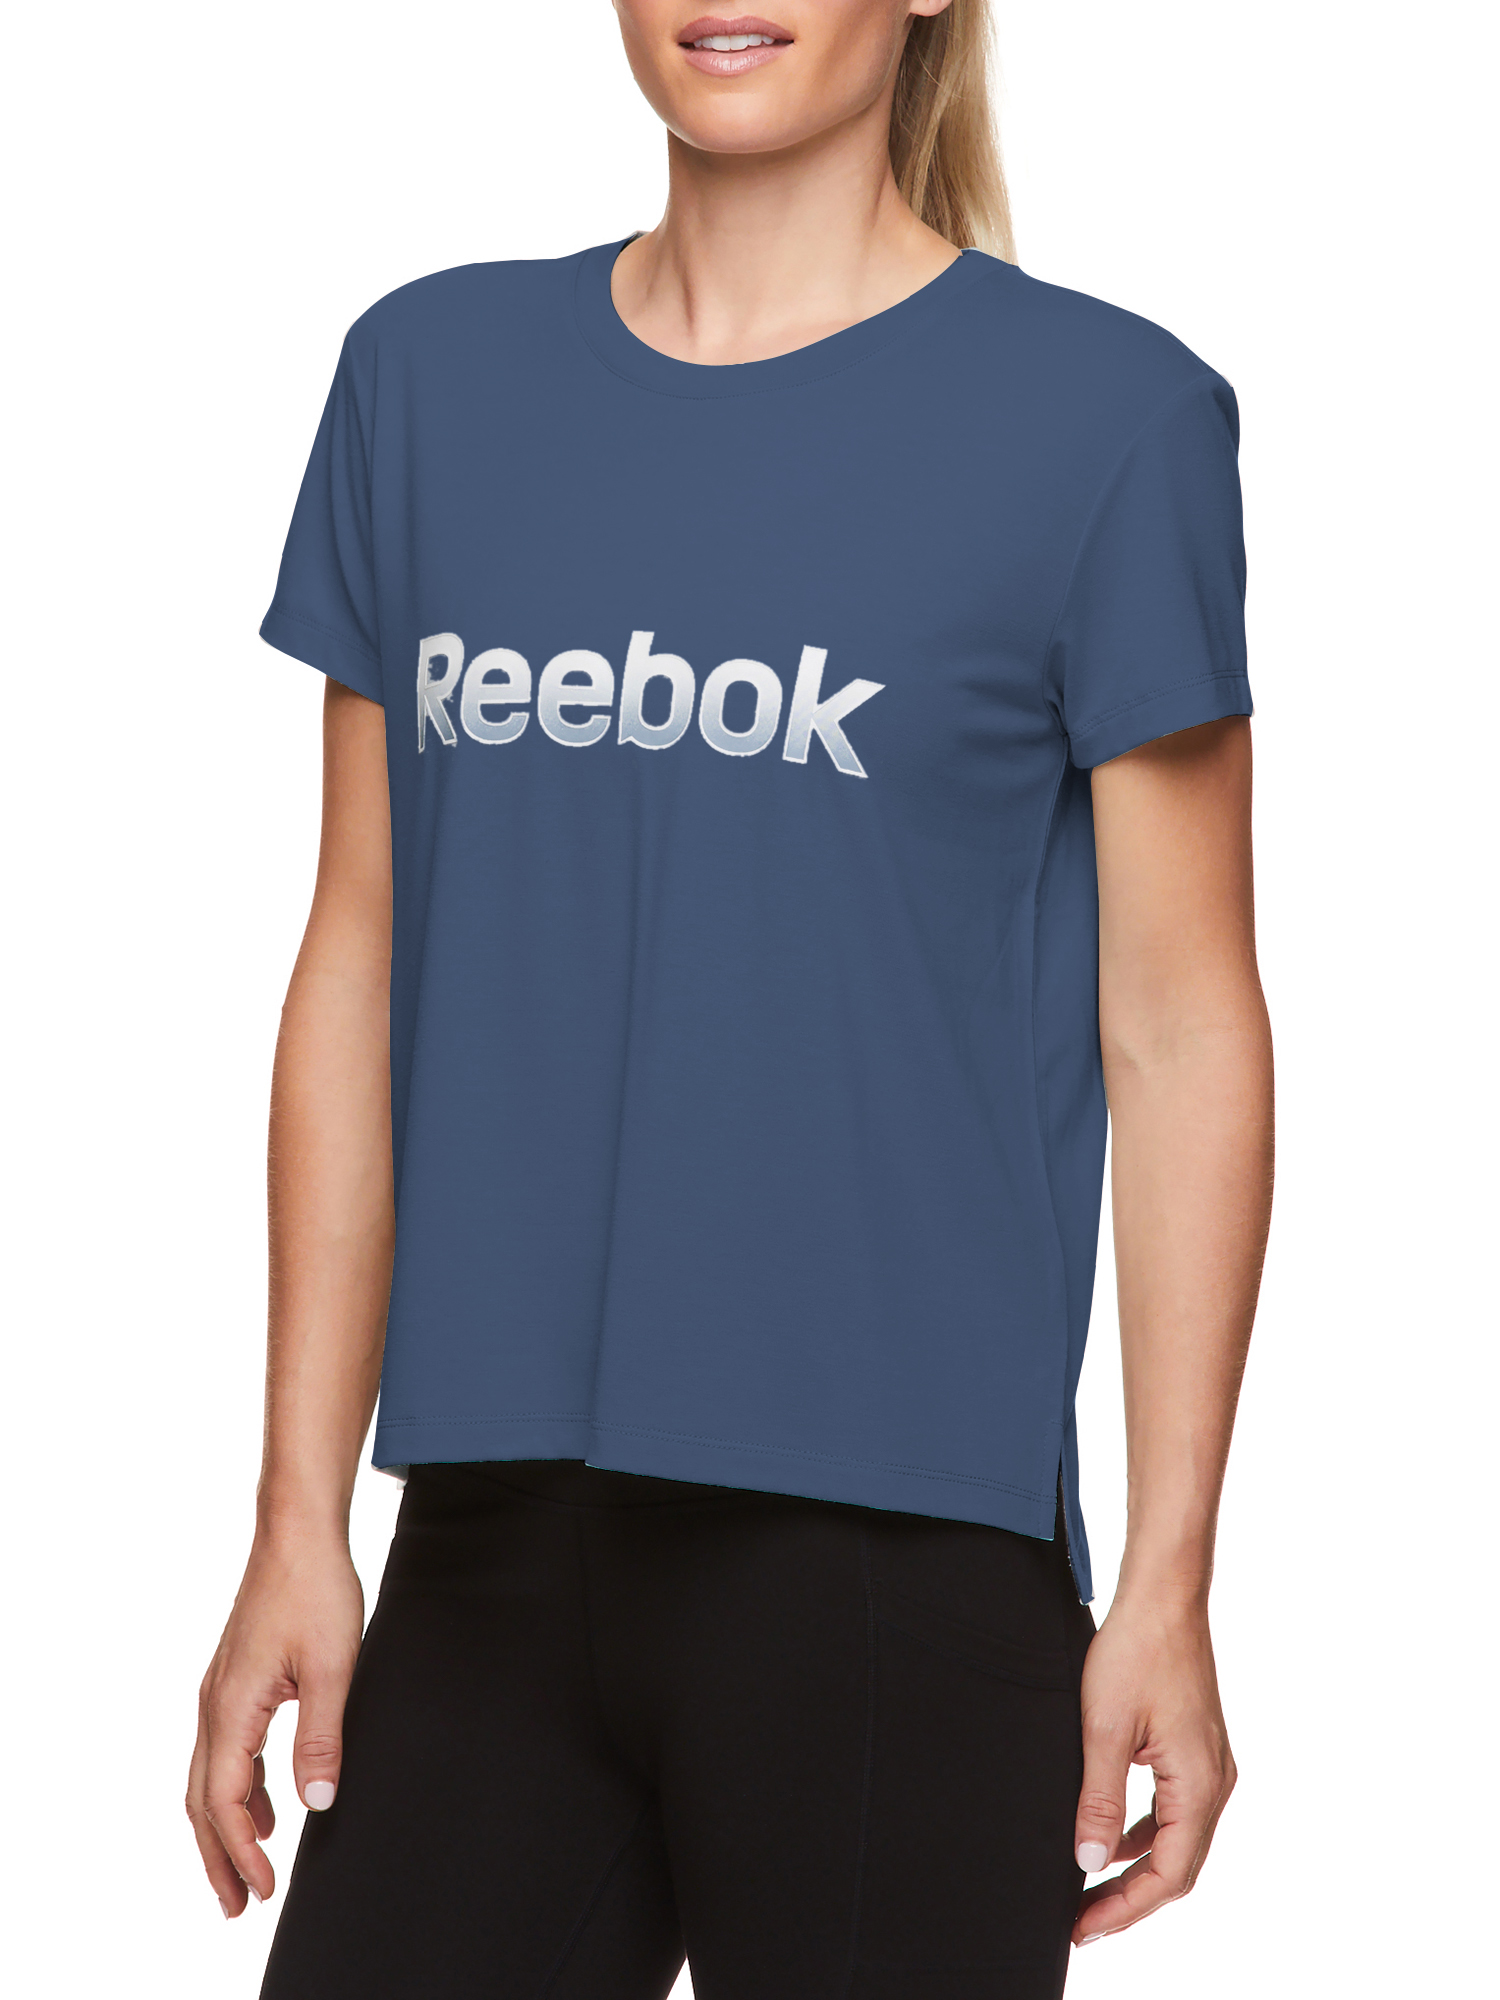 Reebok Women's Short Sleeve Jersey Graphic Tee - image 3 of 4